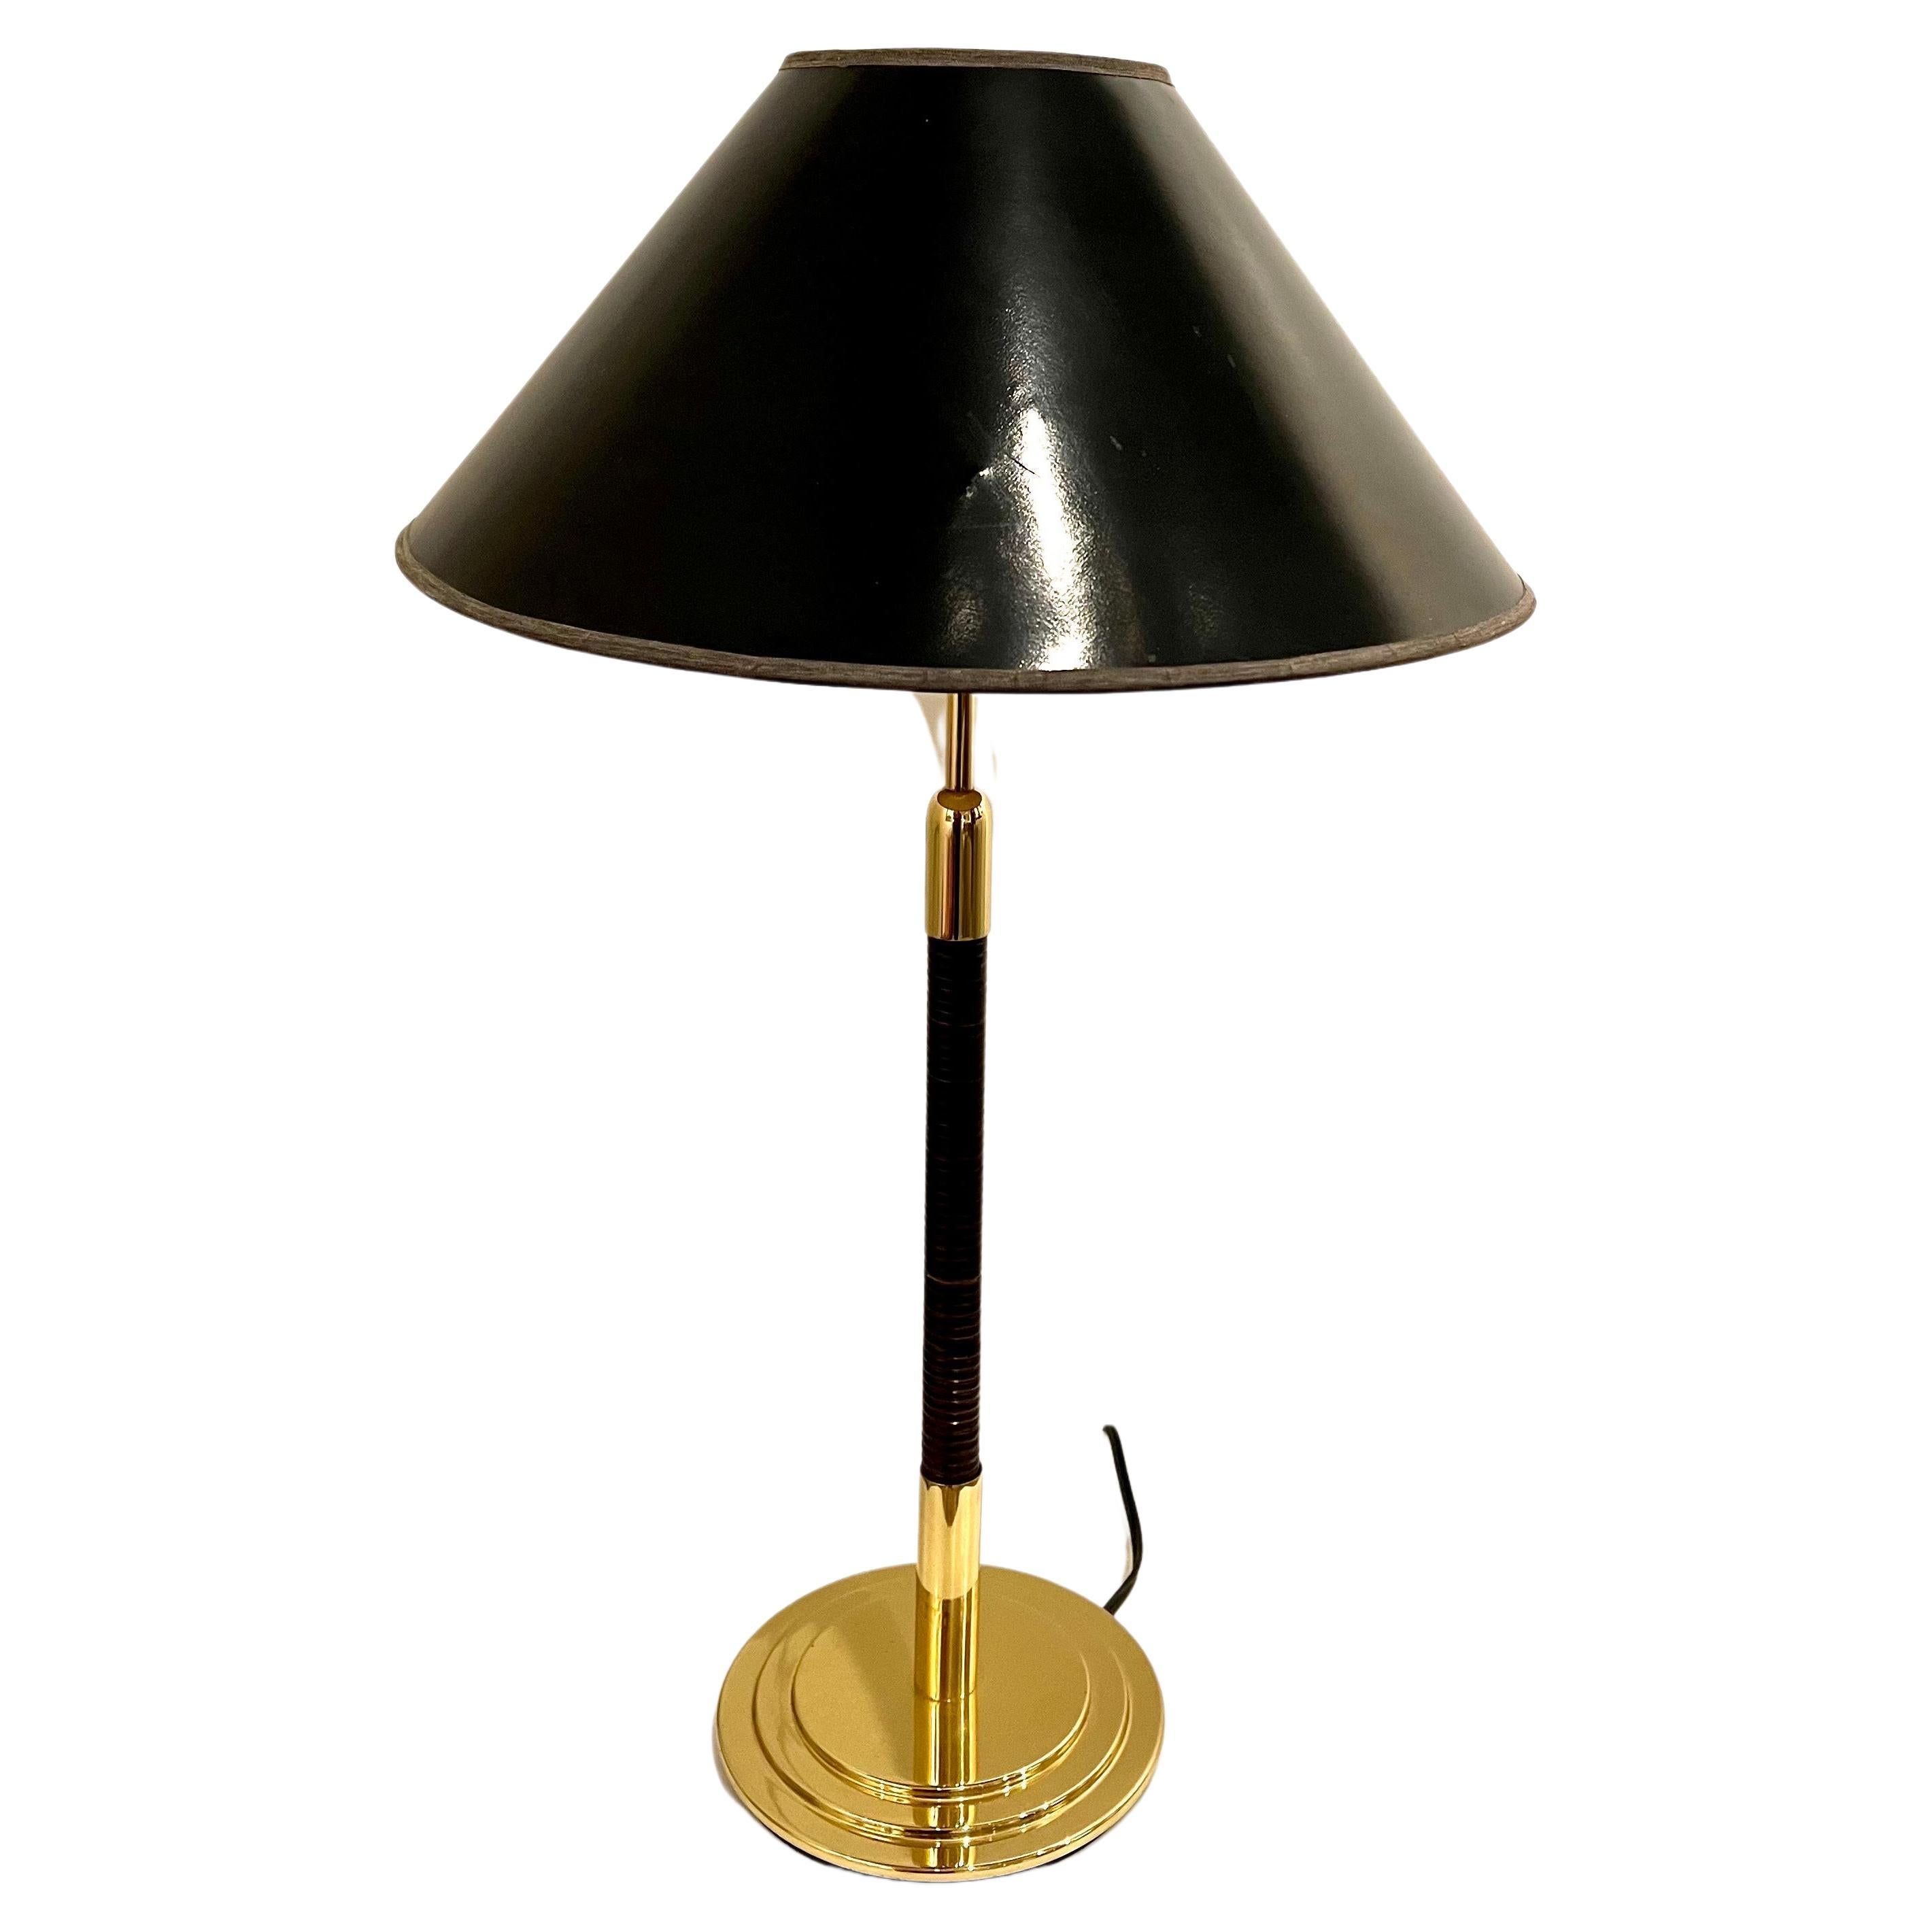 Spanish Postmodern Pair of Table/Desk & Floor Lamps in Brass & Cane by Metalarte